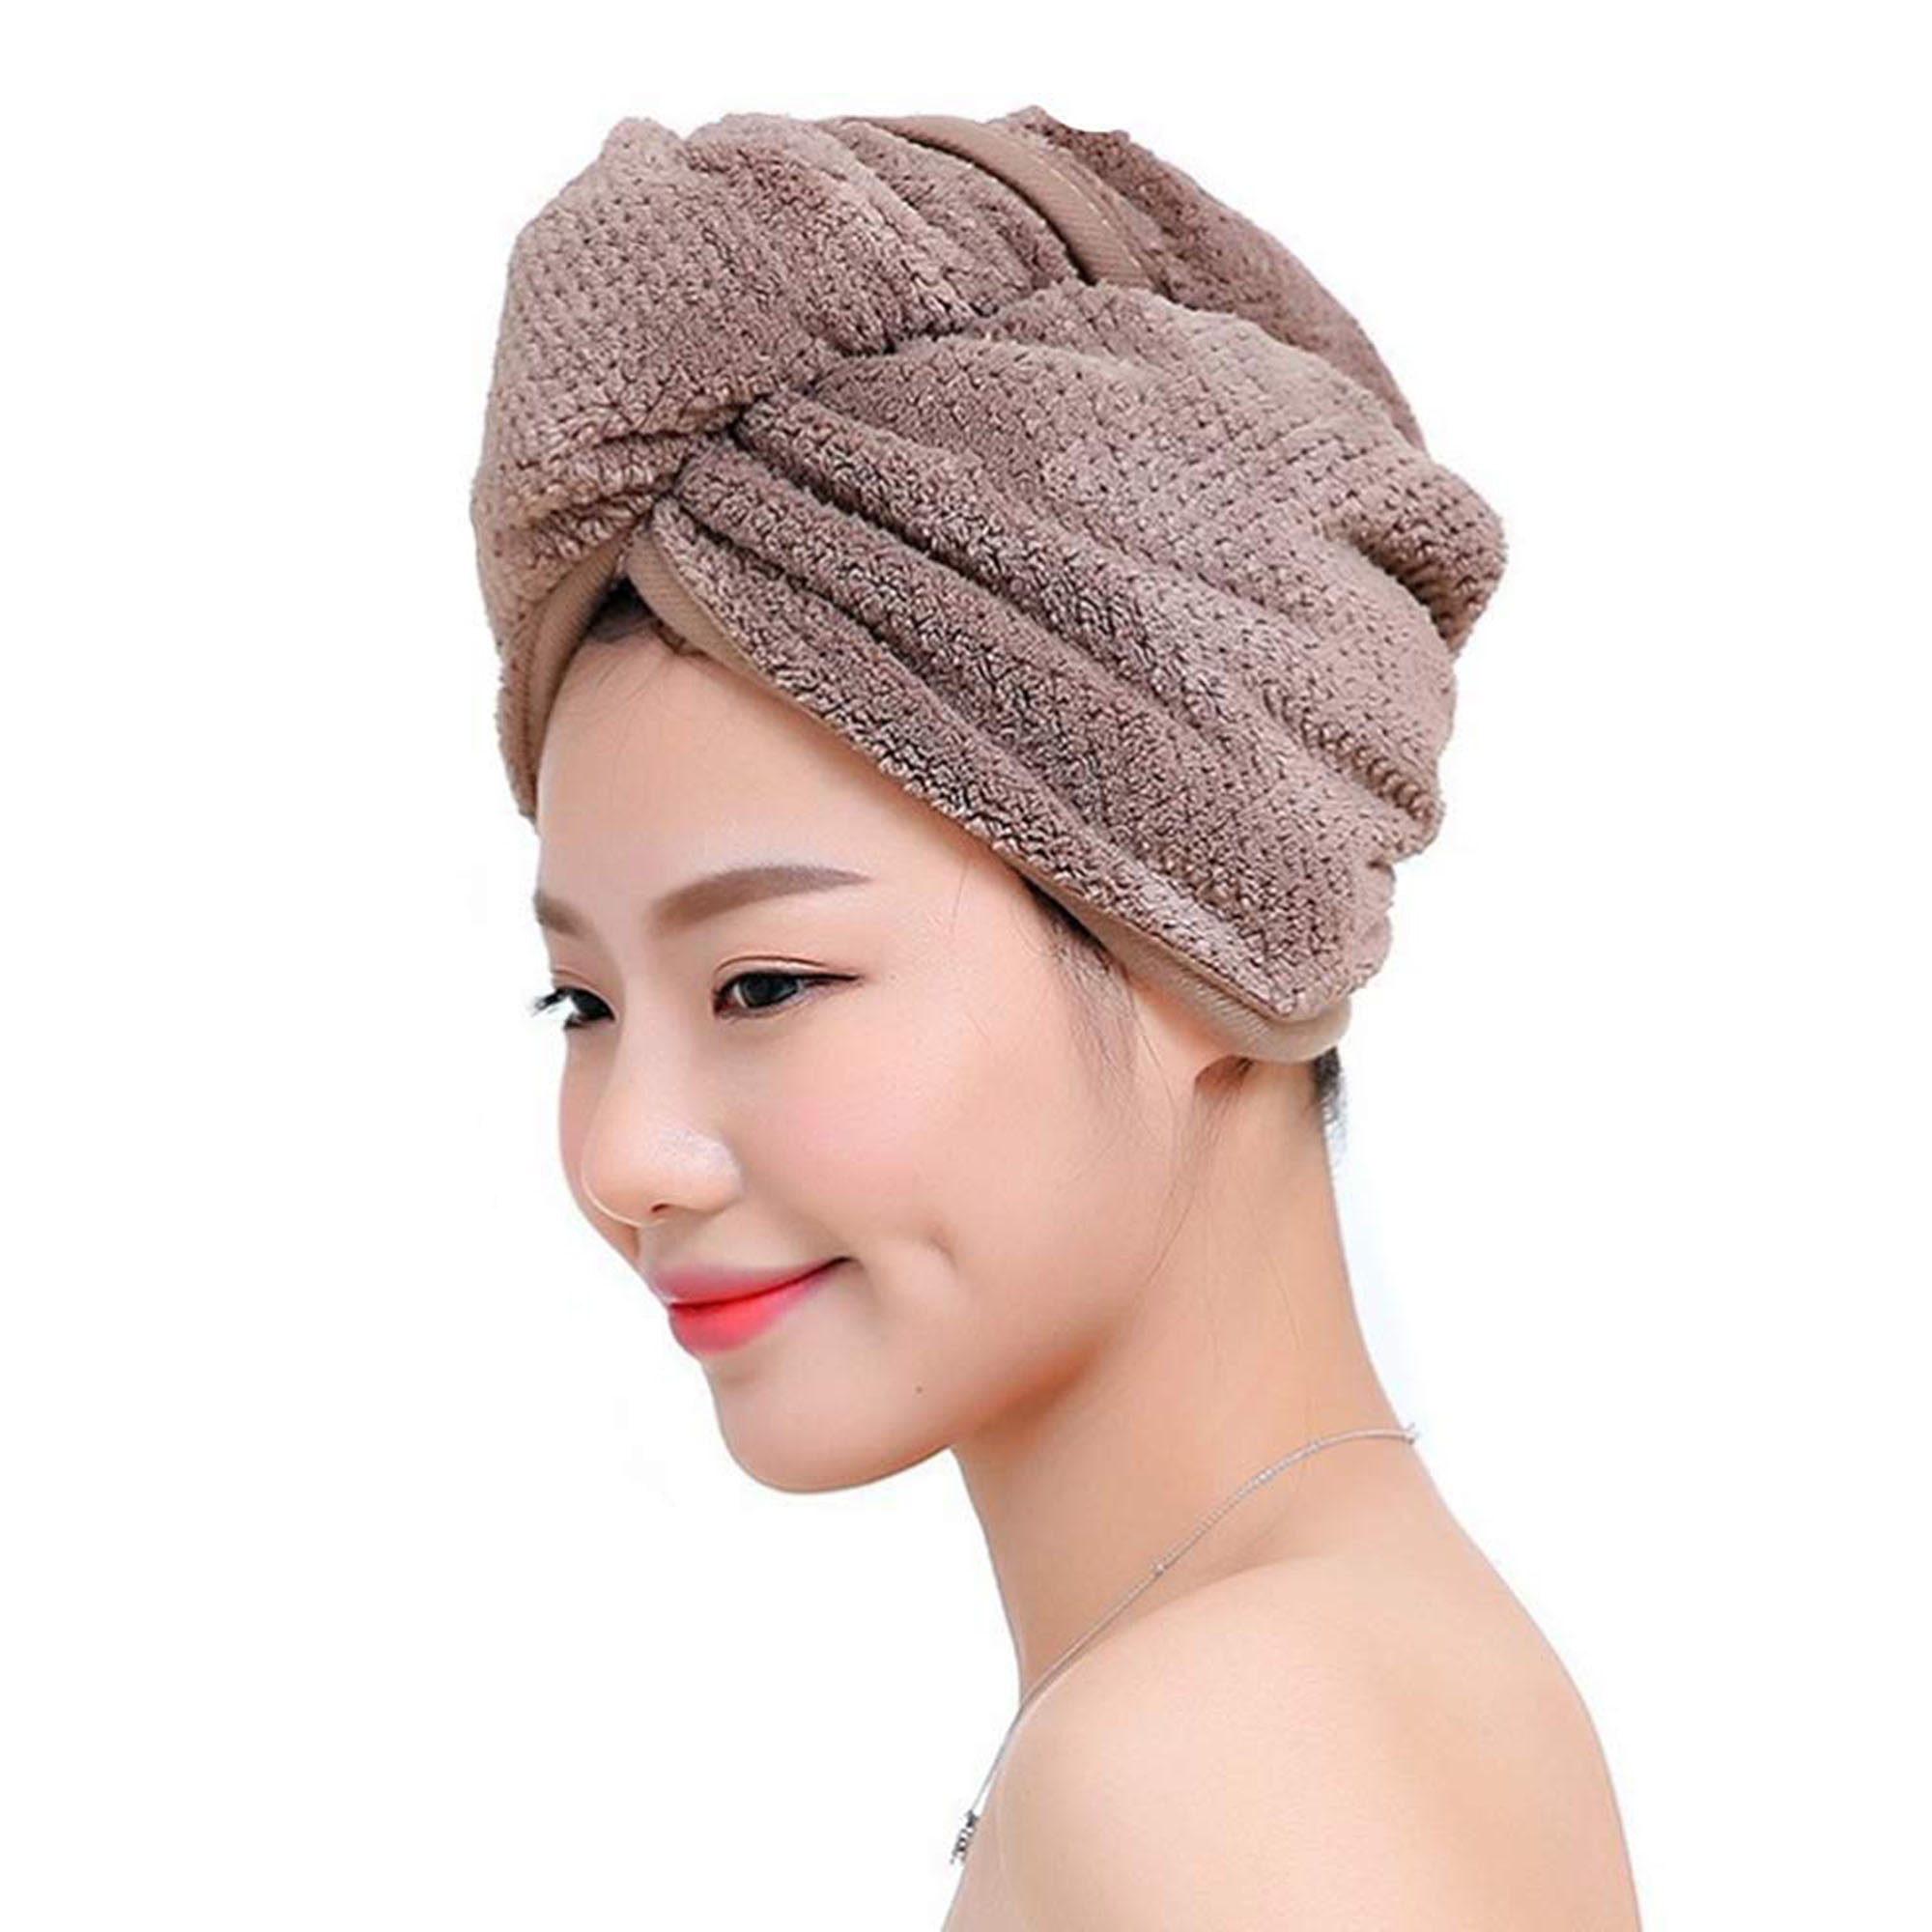 Microfiber Hair Wrap Towel Drying Bath Spa Head Cap Turban Wrap Dry Shower AU 